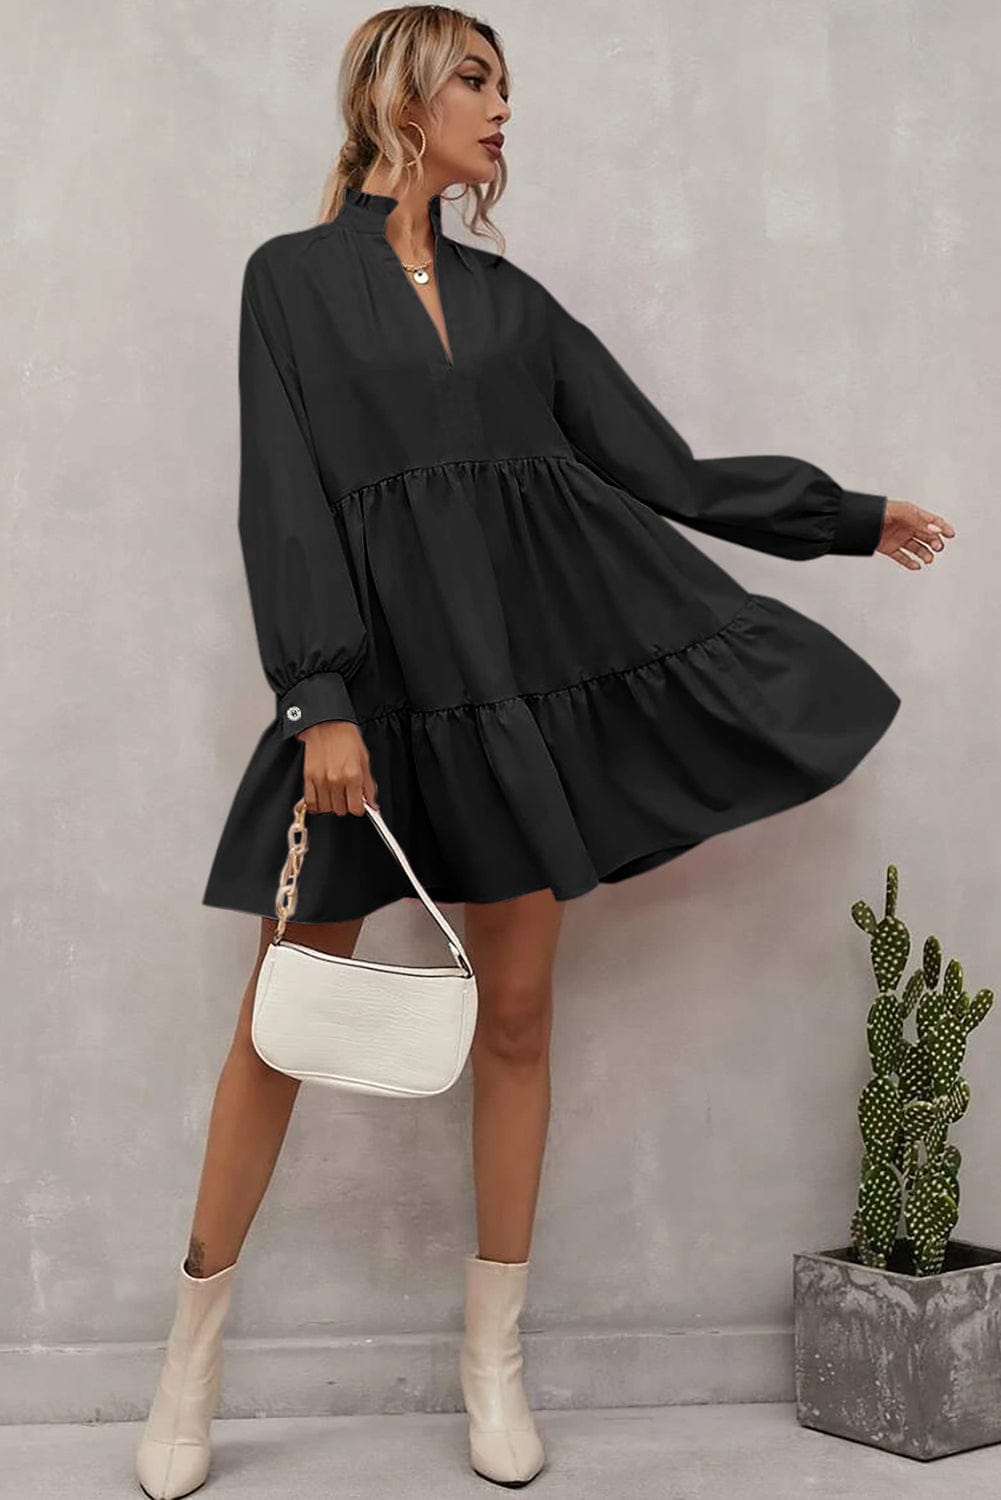 Shoppe EZR Dresses Black Frilled Stand Collar Long Sleeve Ruffle Dress